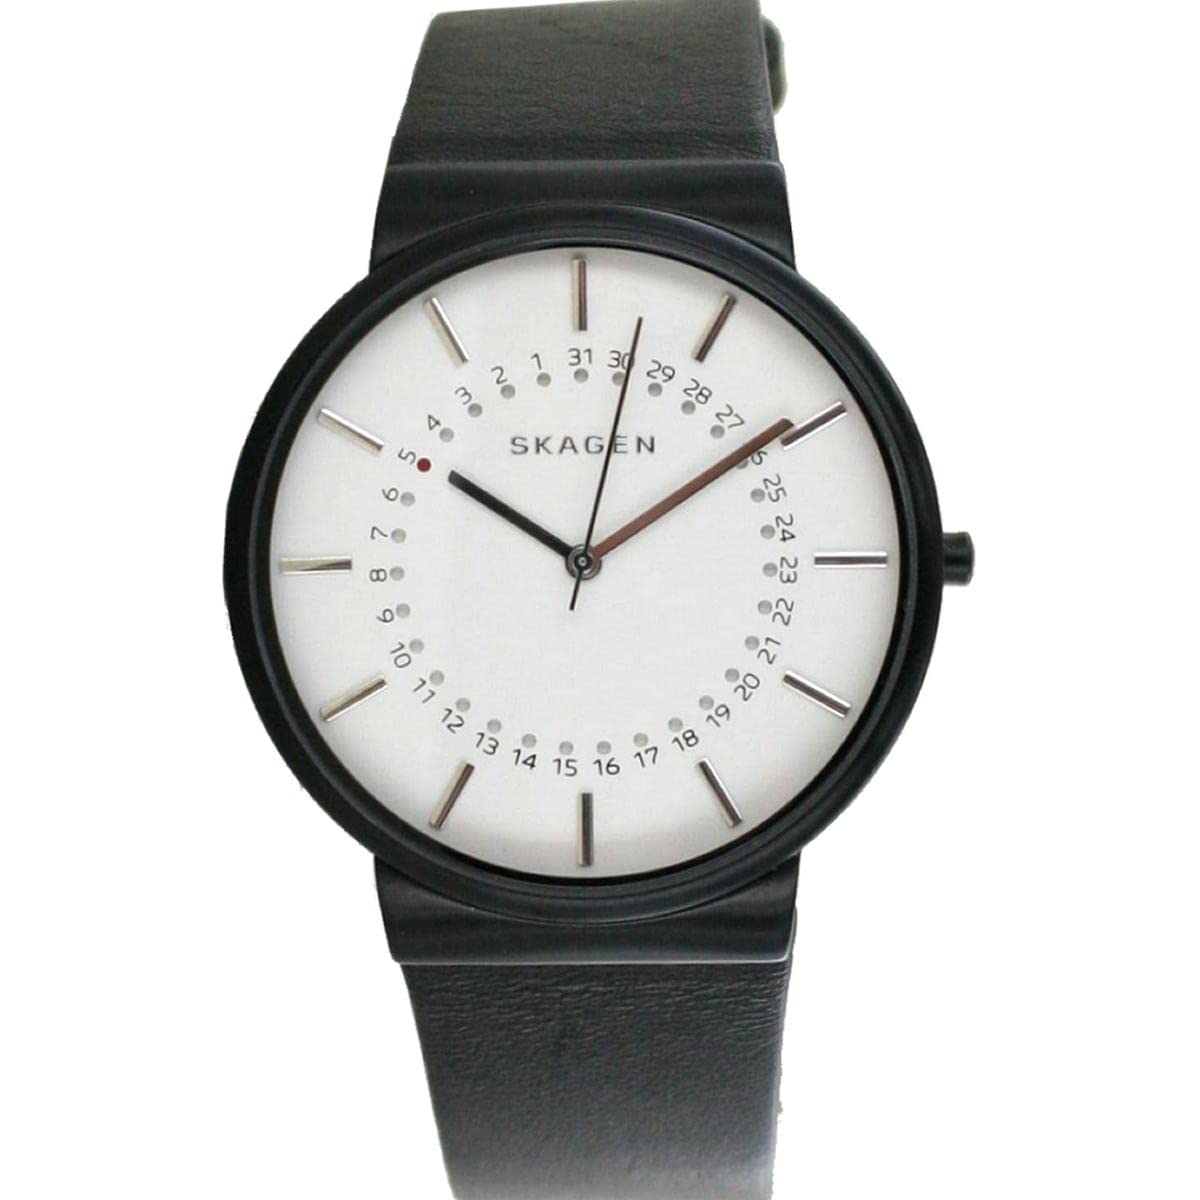 Skagen Herren Analog Quarz Uhr mit Leder Armband SKW6243